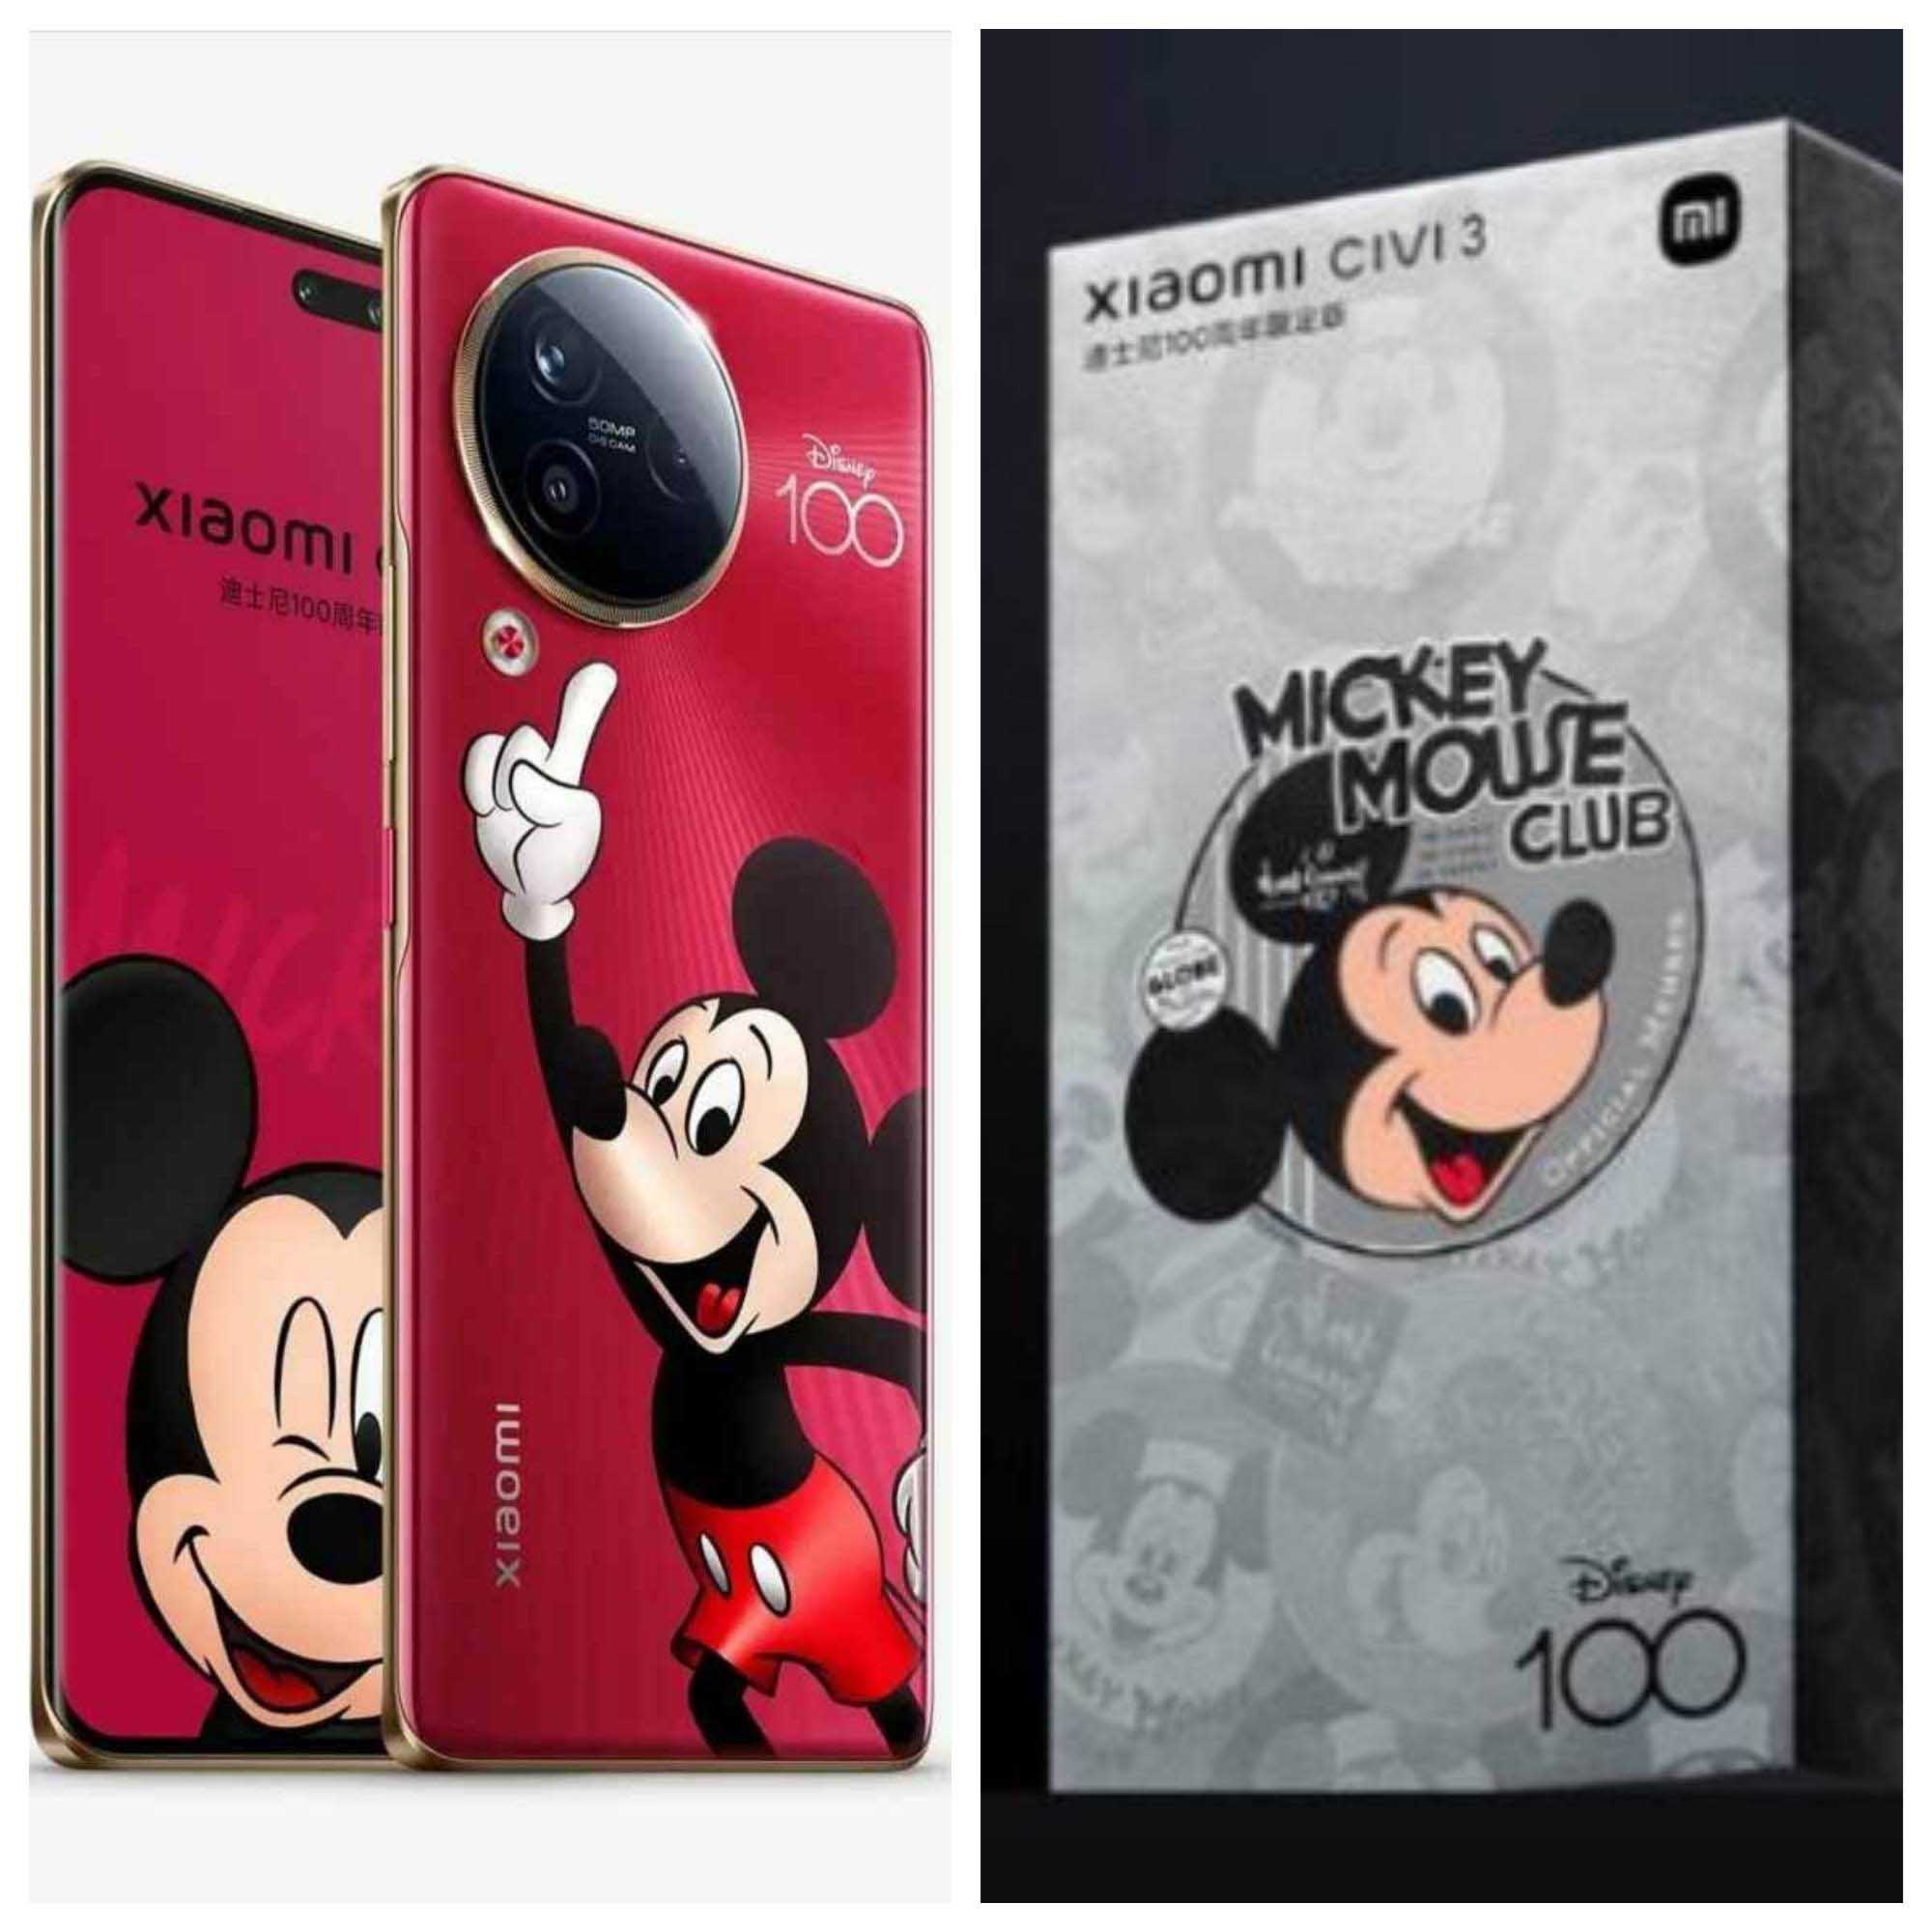 Xiaomi dan Mickey Mouse Disney telah Berkolaborasi Meluncurkan Xiaomi Civic 3 edisi terbatas 